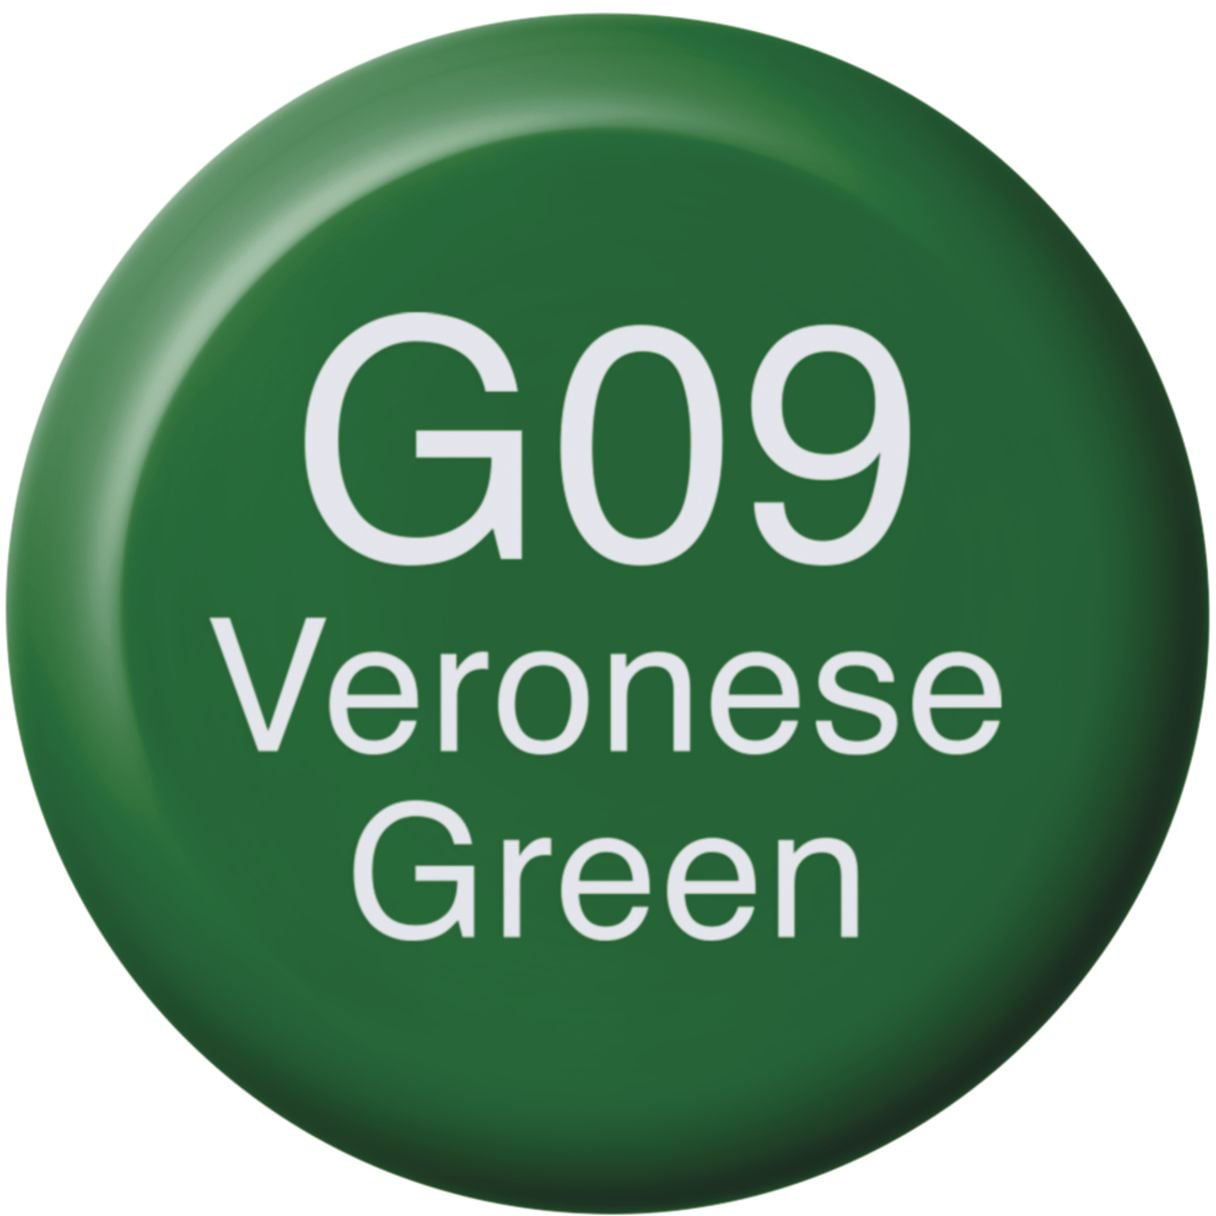 COPIC Ink Refill 21076208 G09 - Veronese Green G09 - Veronese Green